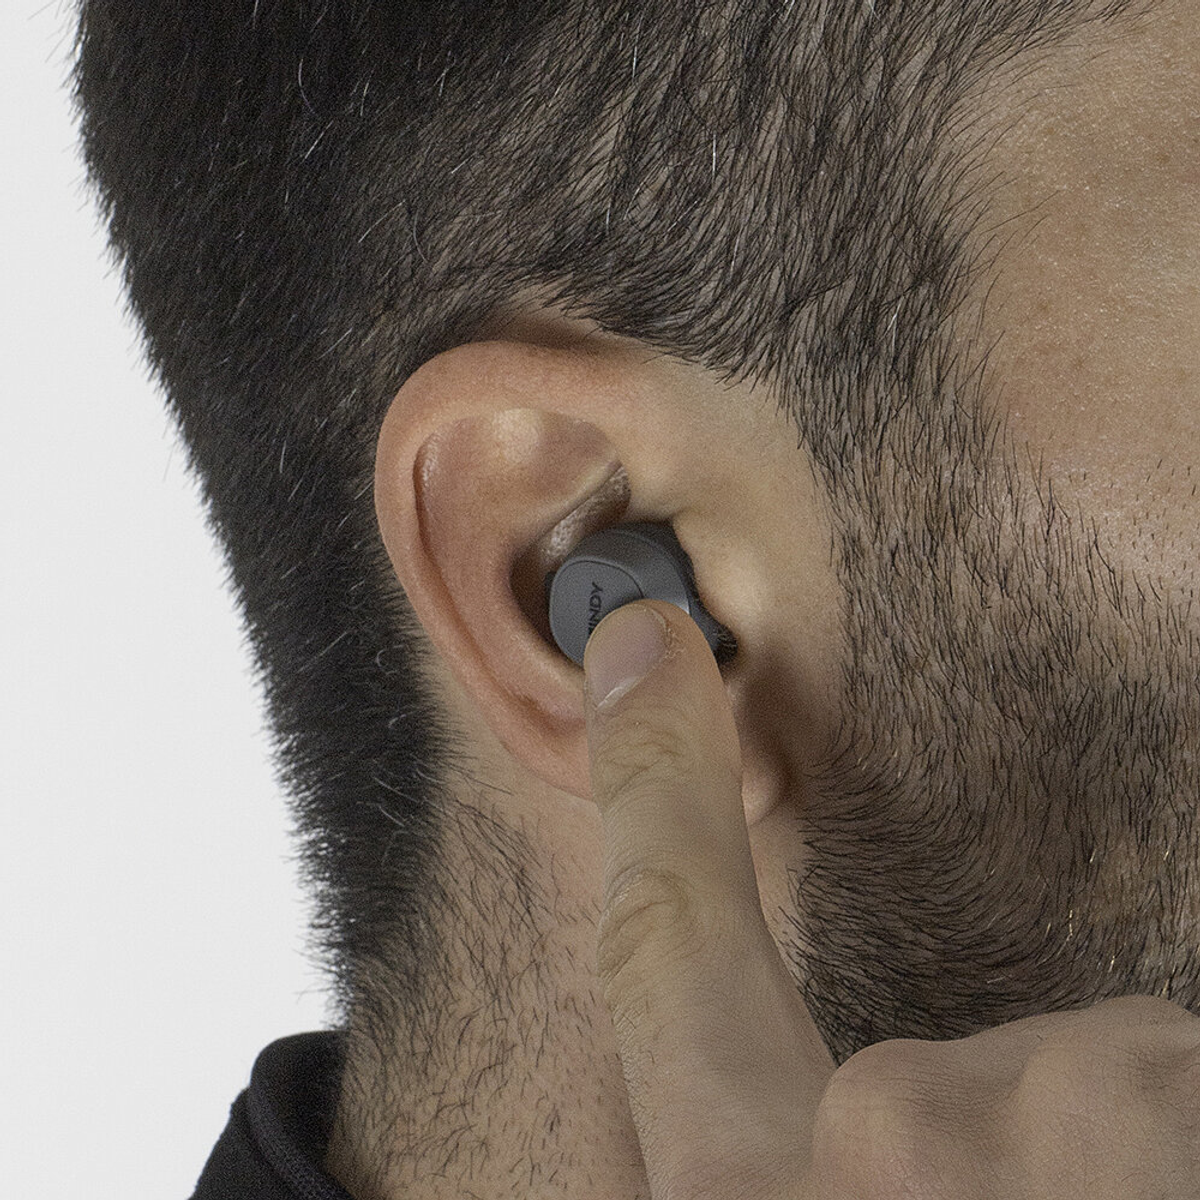 LINDY 73194, In-ear Kopfhörer Bluetooth Schwarz